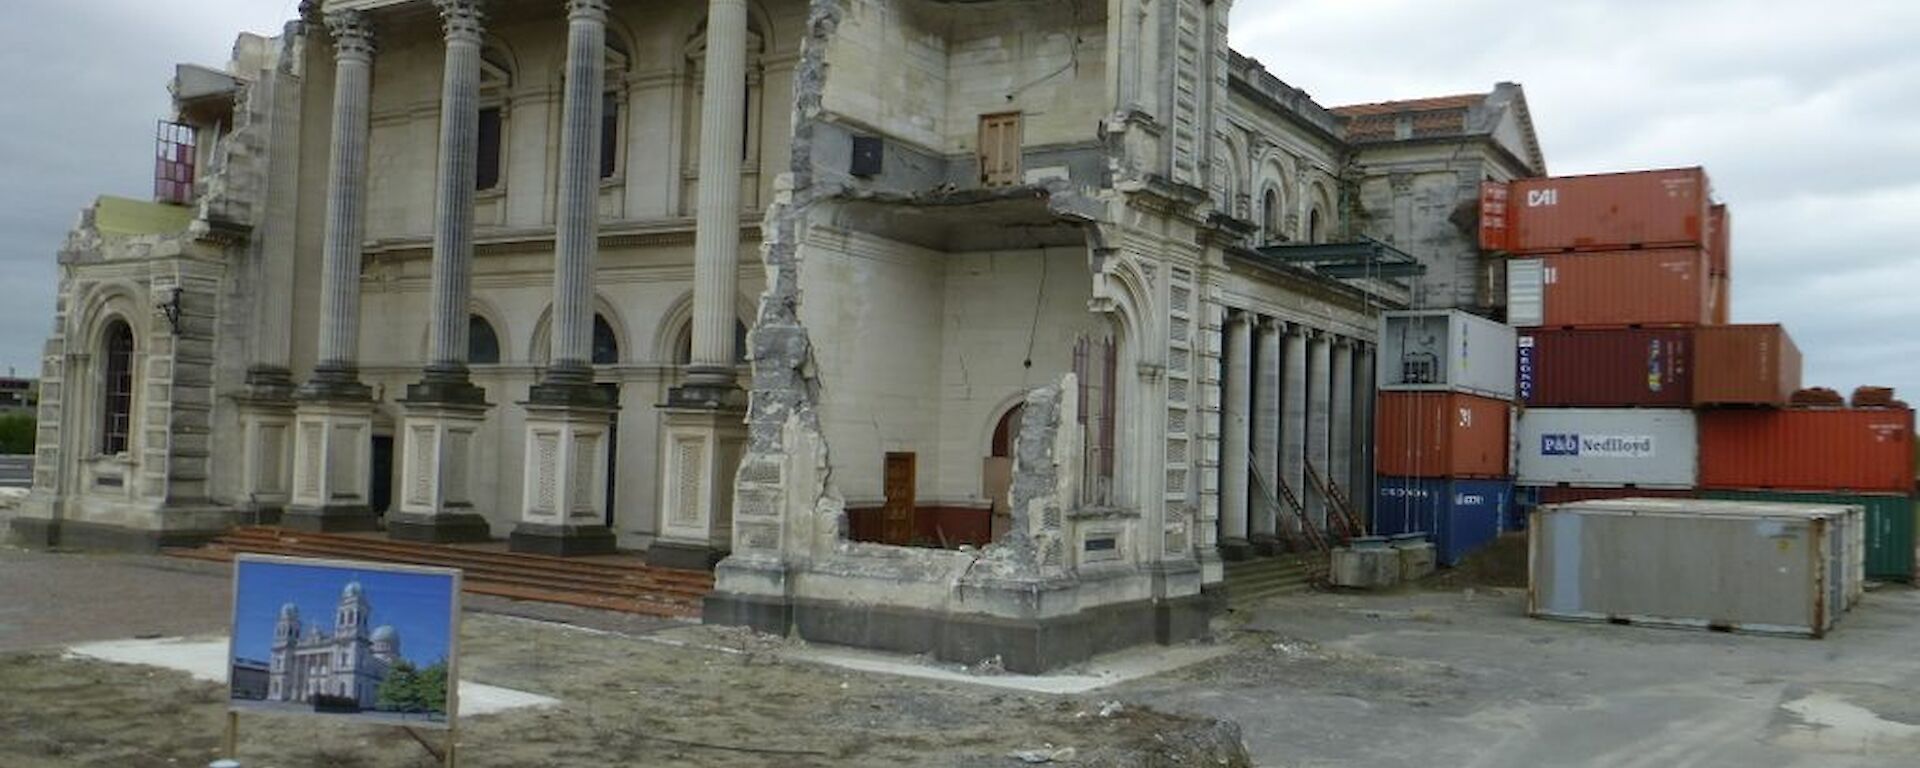 Earth quake devastated Catholic Cathedral